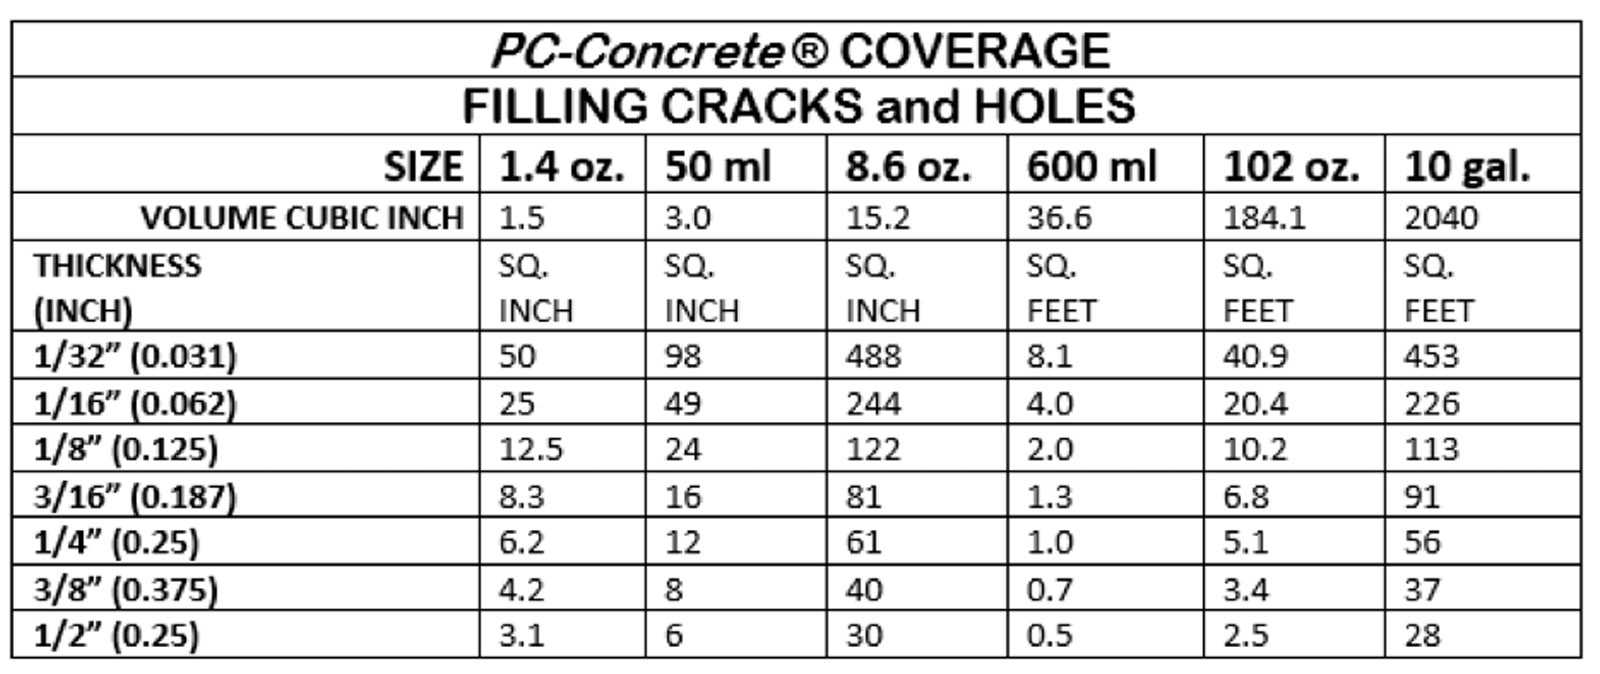 PC-Concrete Coverage - Filling Cracks and Holes